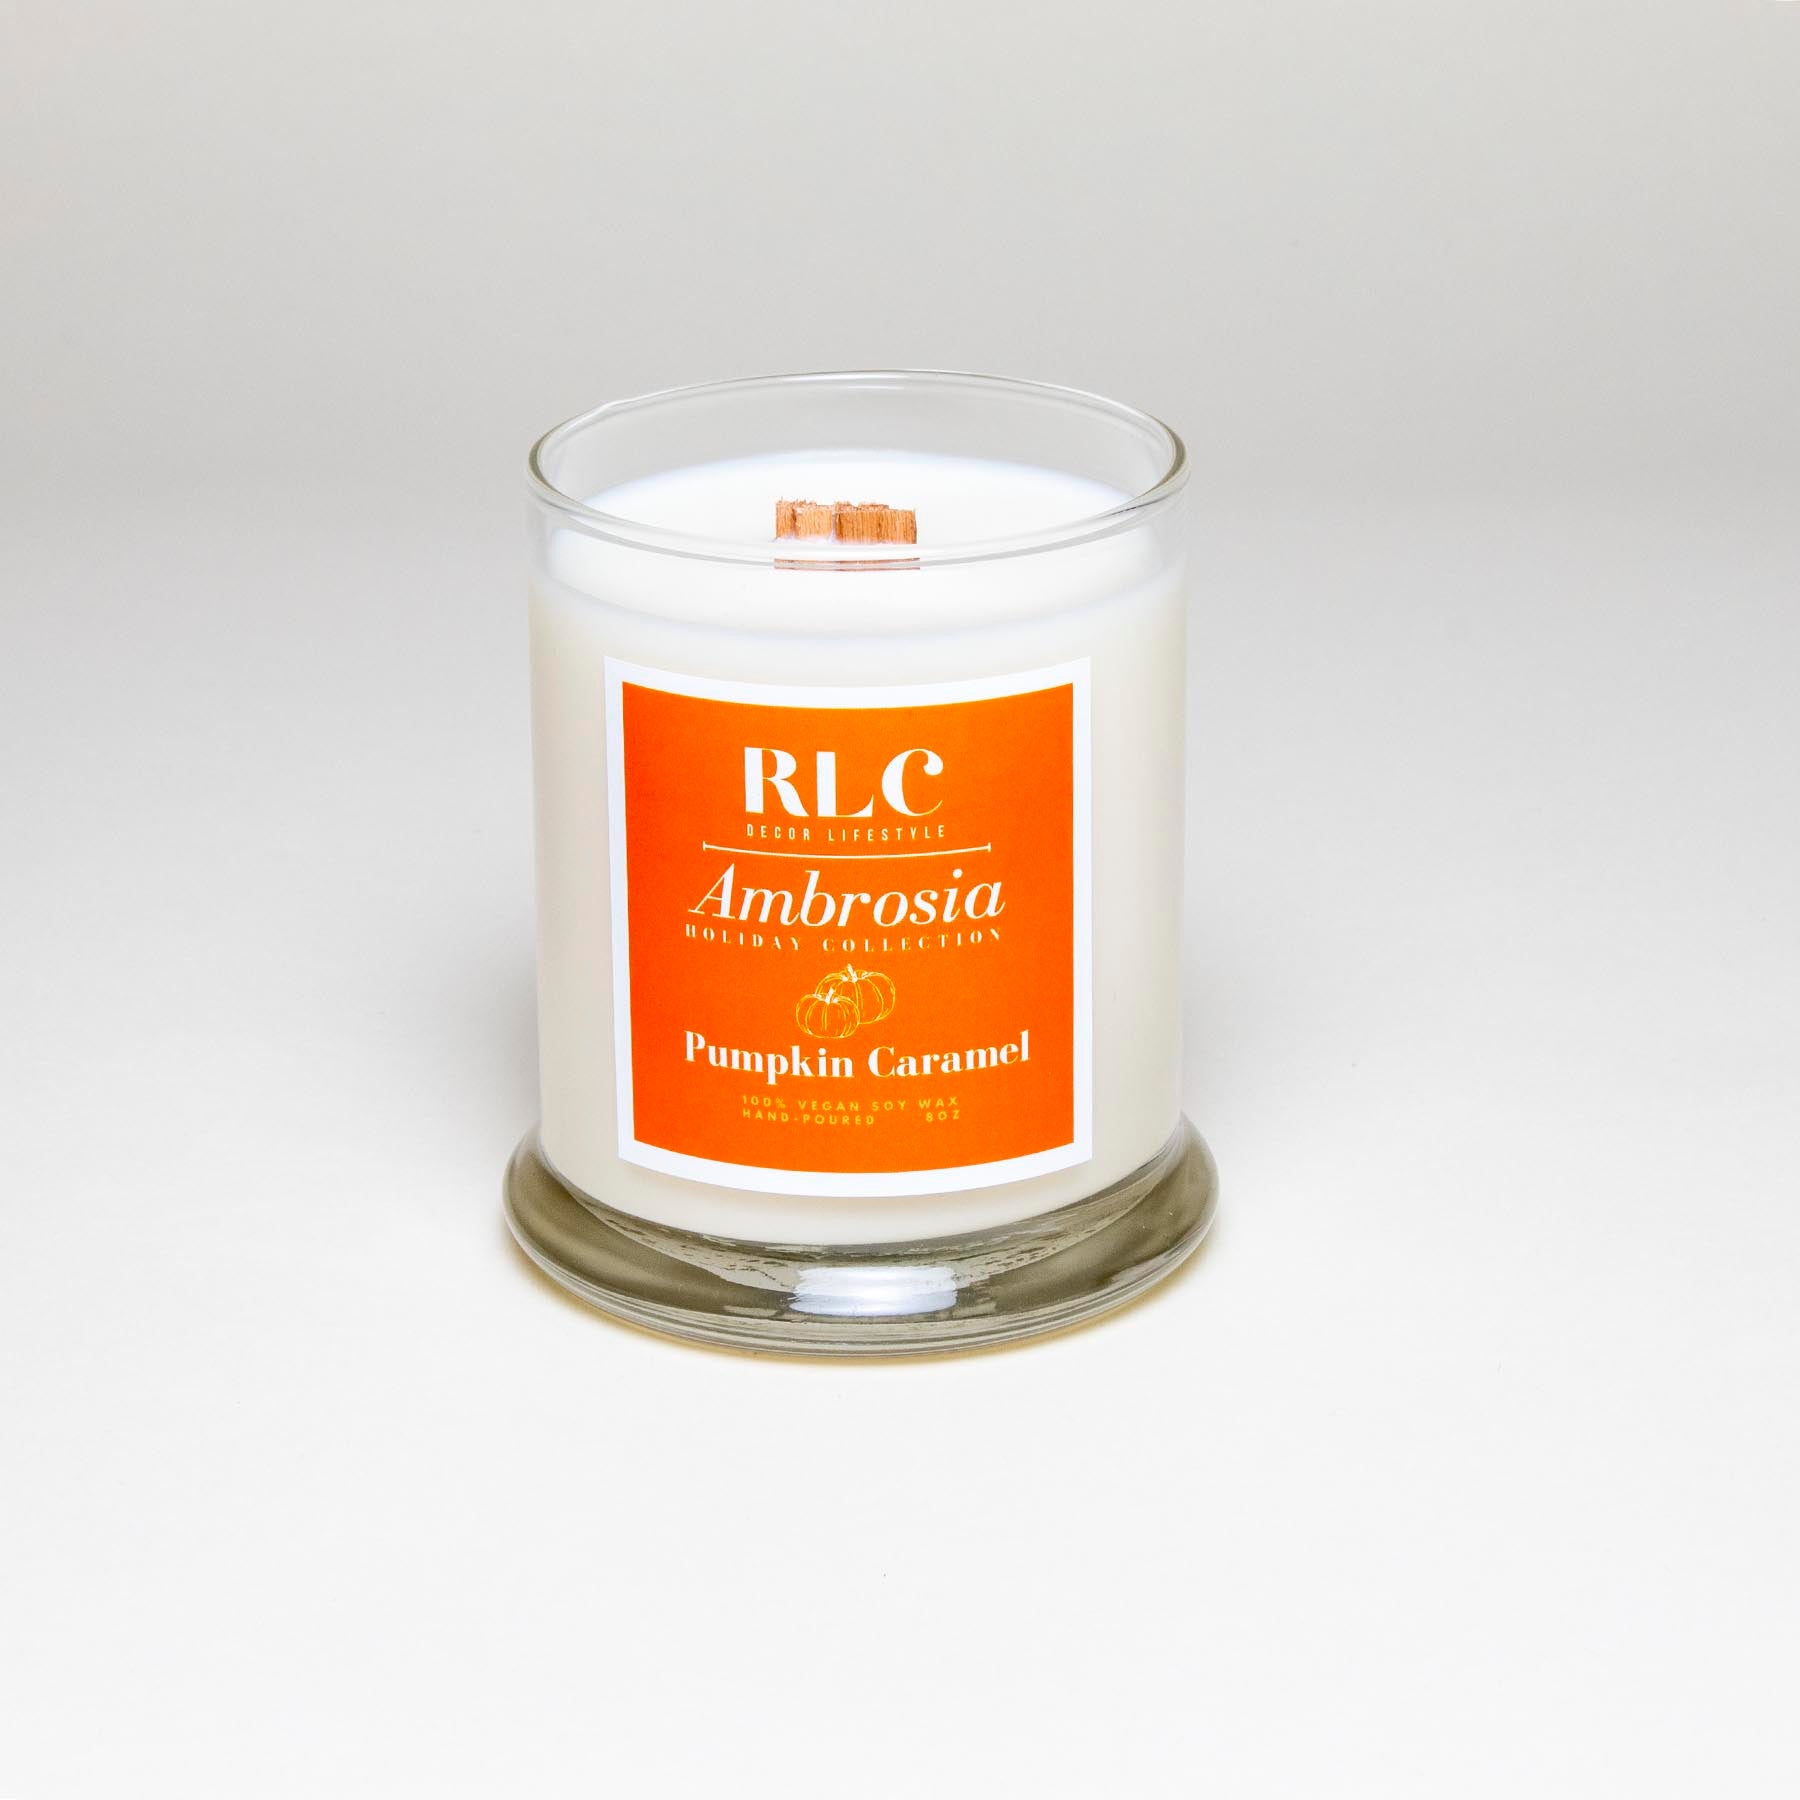 RLC Decor Lifestyle - Ambrosia Pumpkin Caramel scented candle